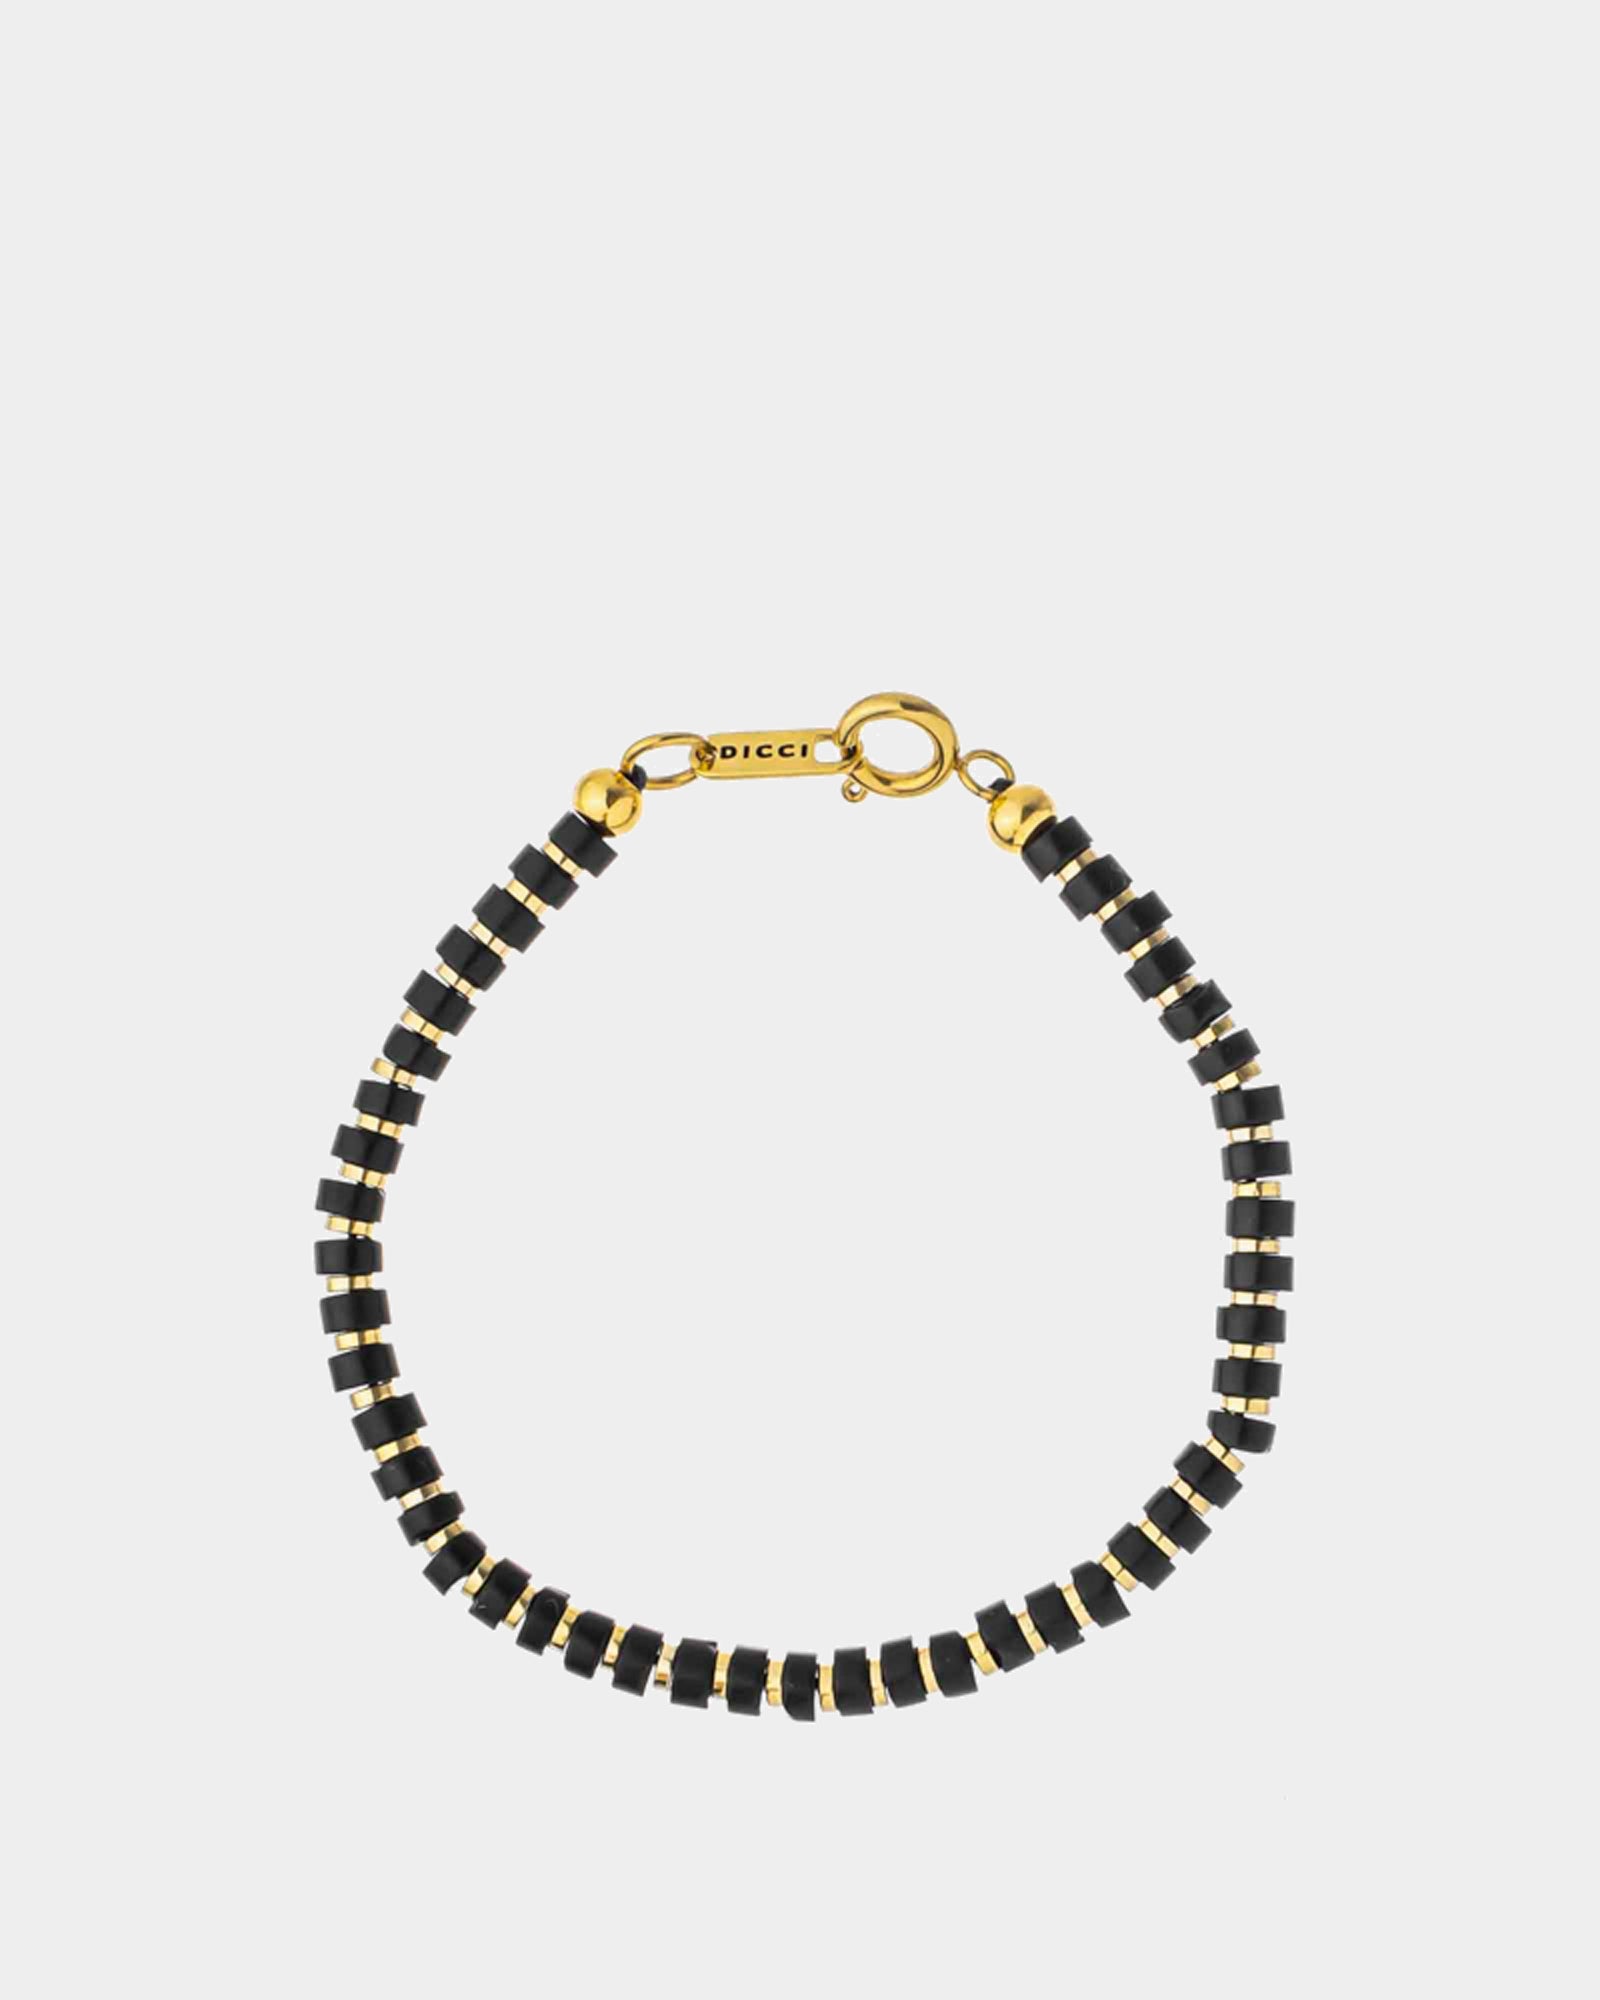 Zagora Bracelet - Natural Beads Bracelet 'Zagora' - Online Unissex Jewelry - Dicci